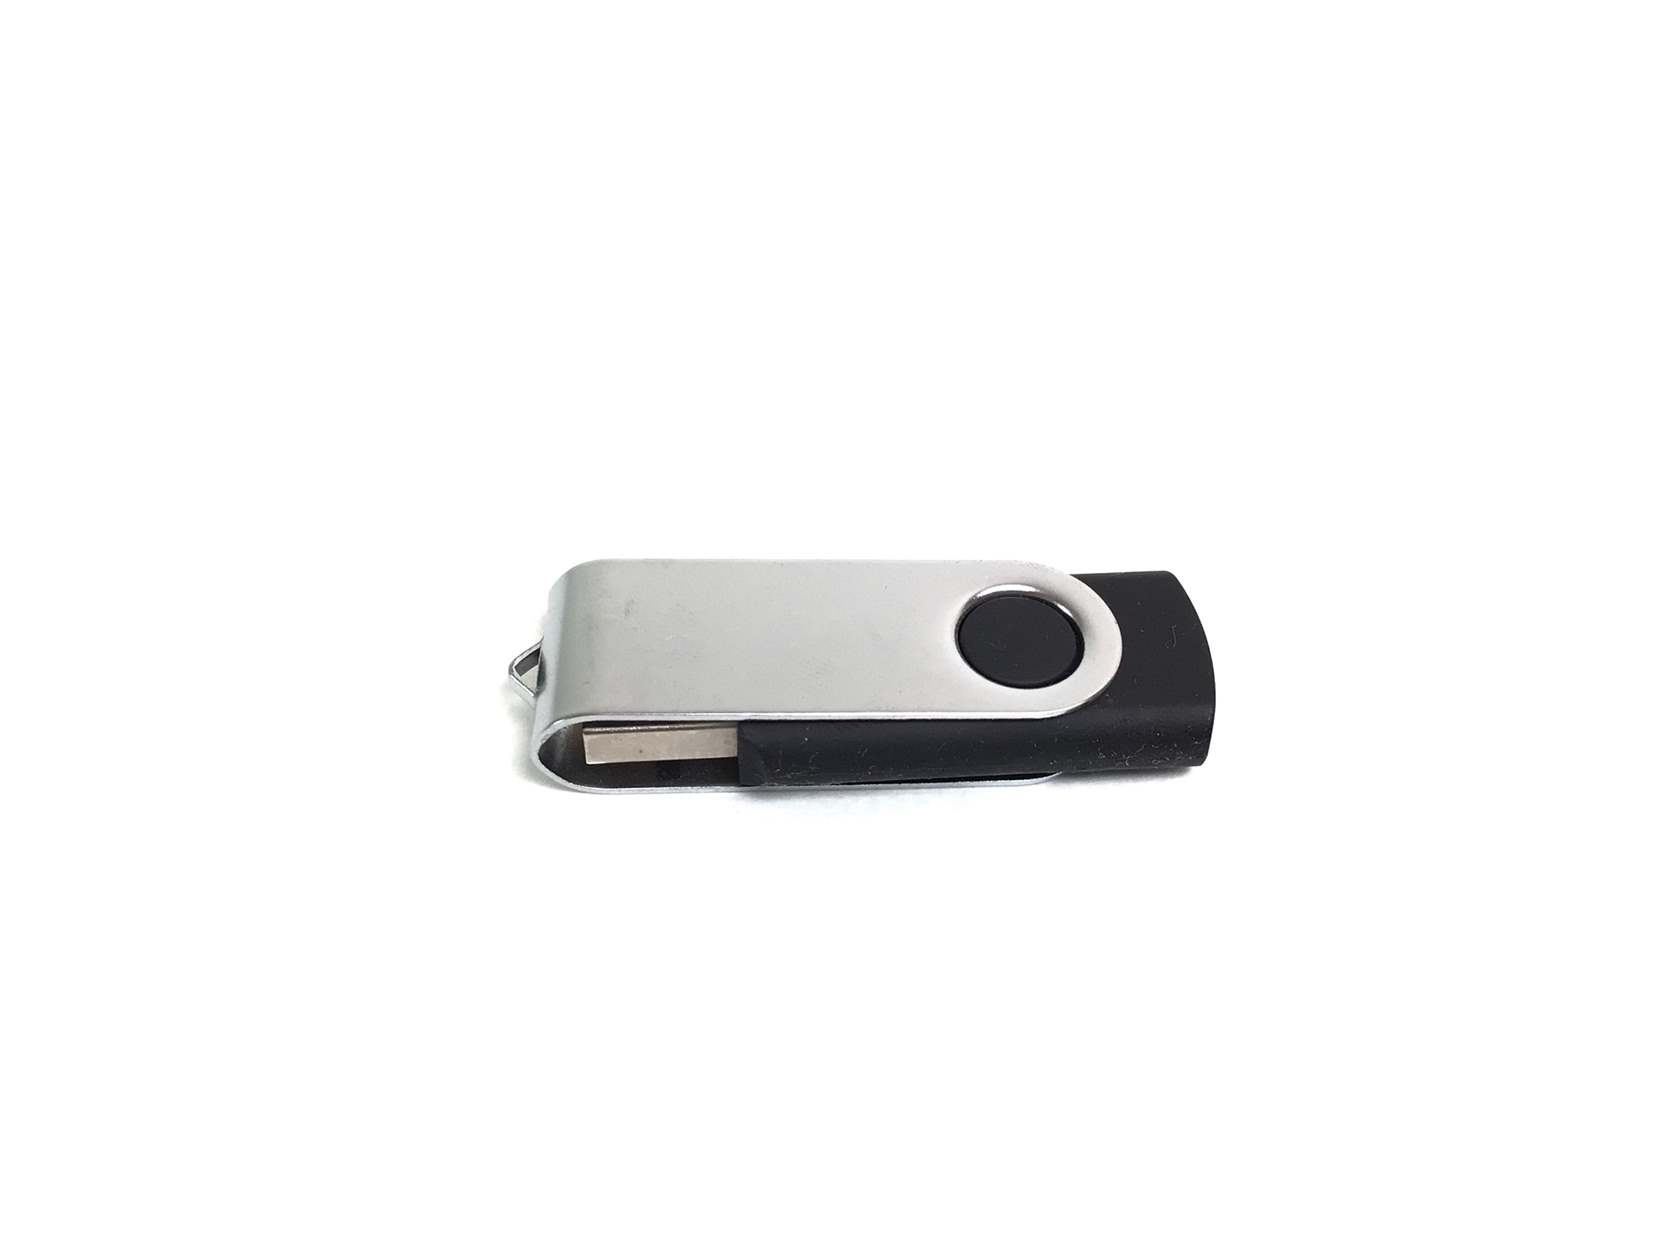 USB Drive Program (Used)